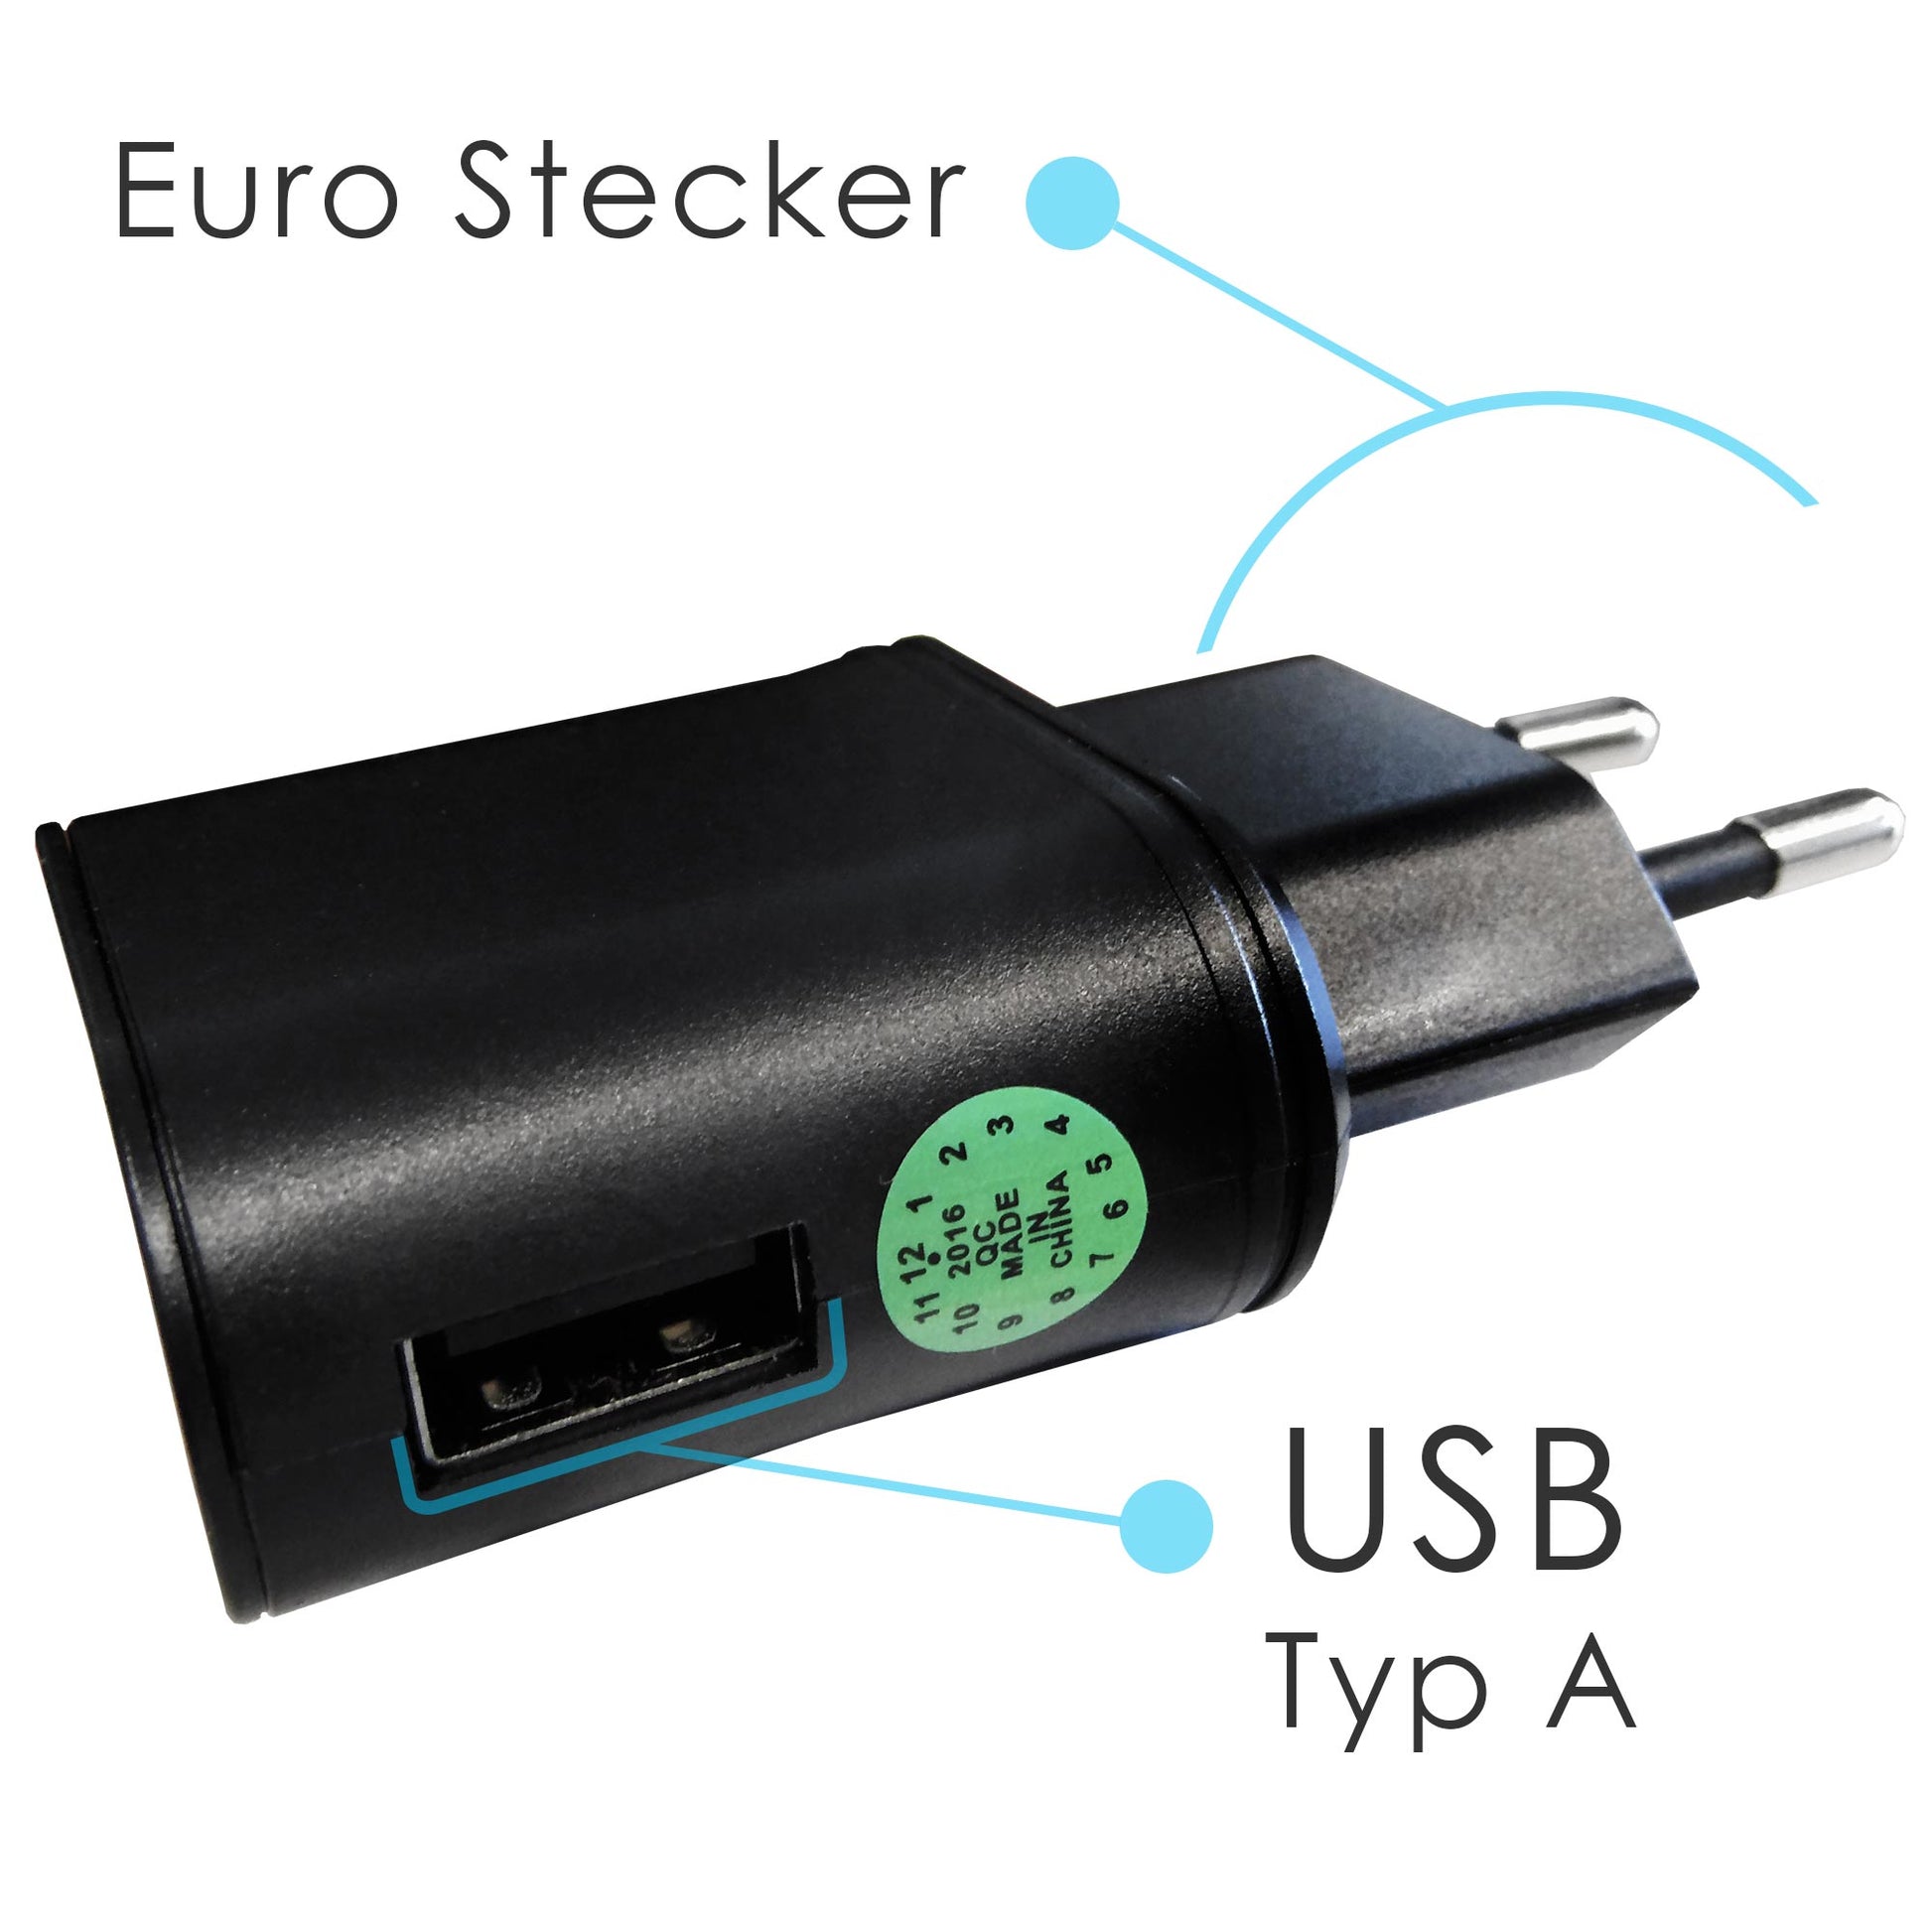 USB-Ladegerät, 5V/1A